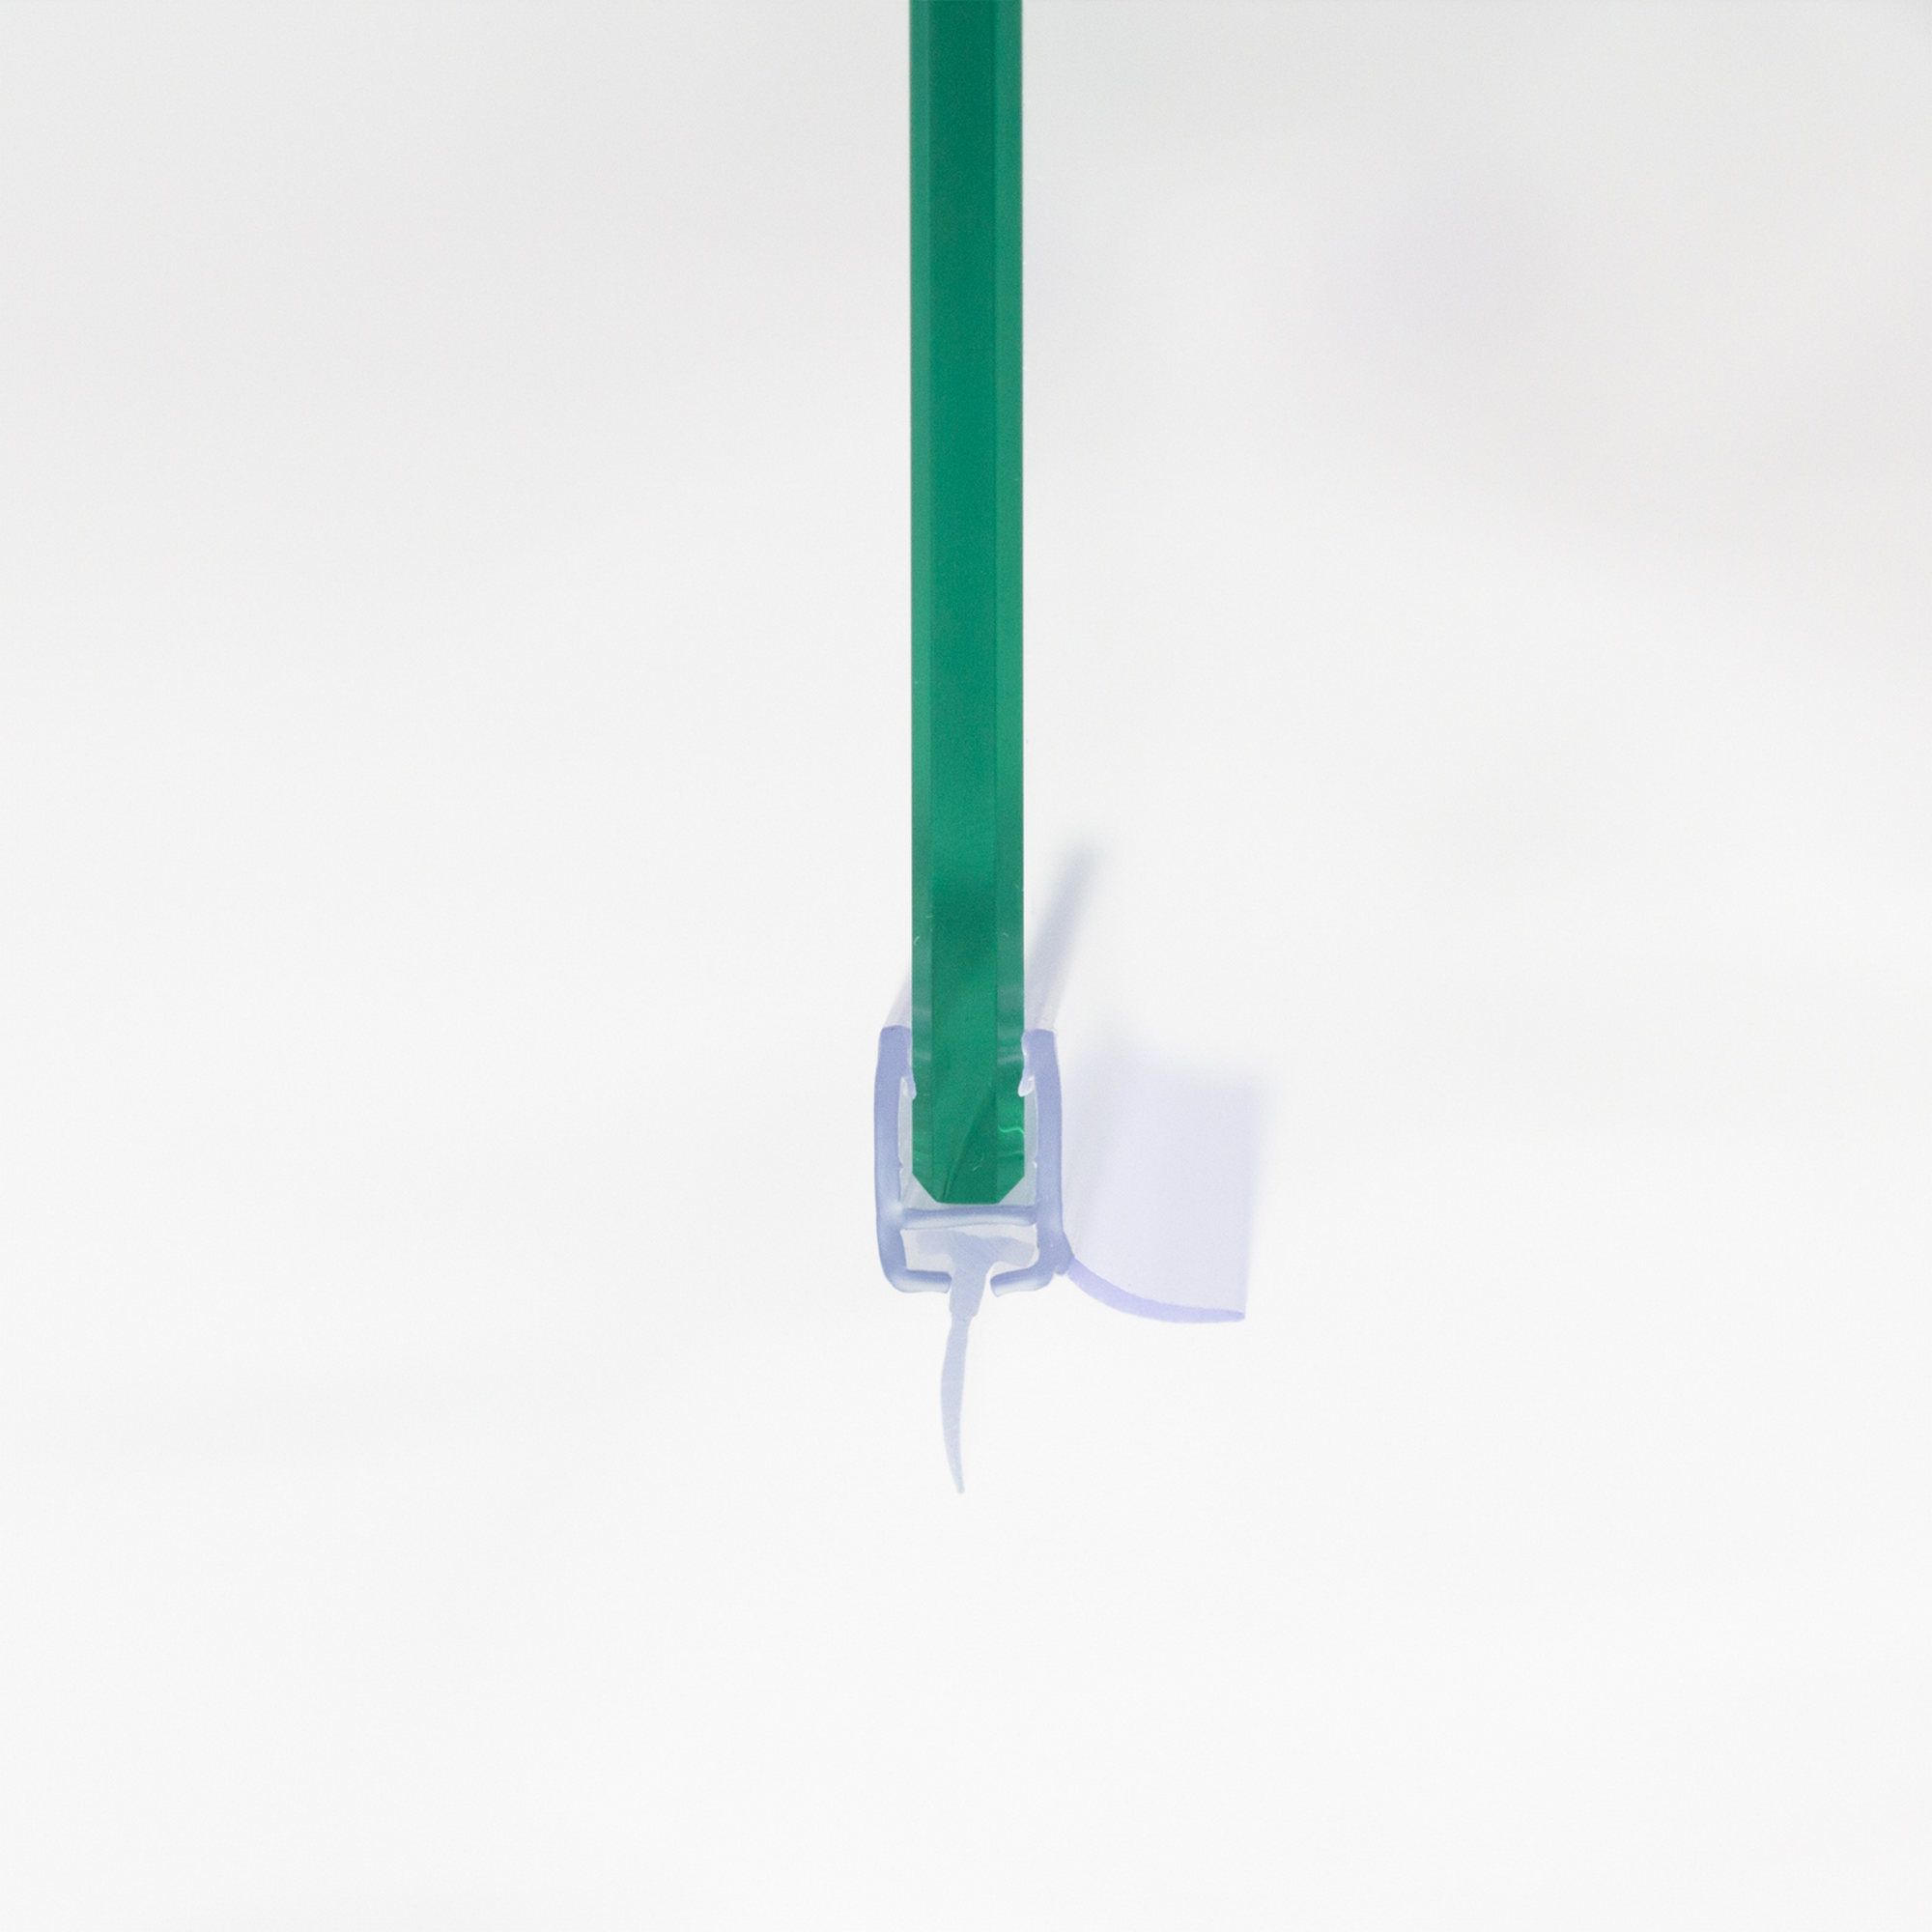 Duschdichtungsset für Drehfalttüren, gerade, waagerecht, 1000 mm + product picture